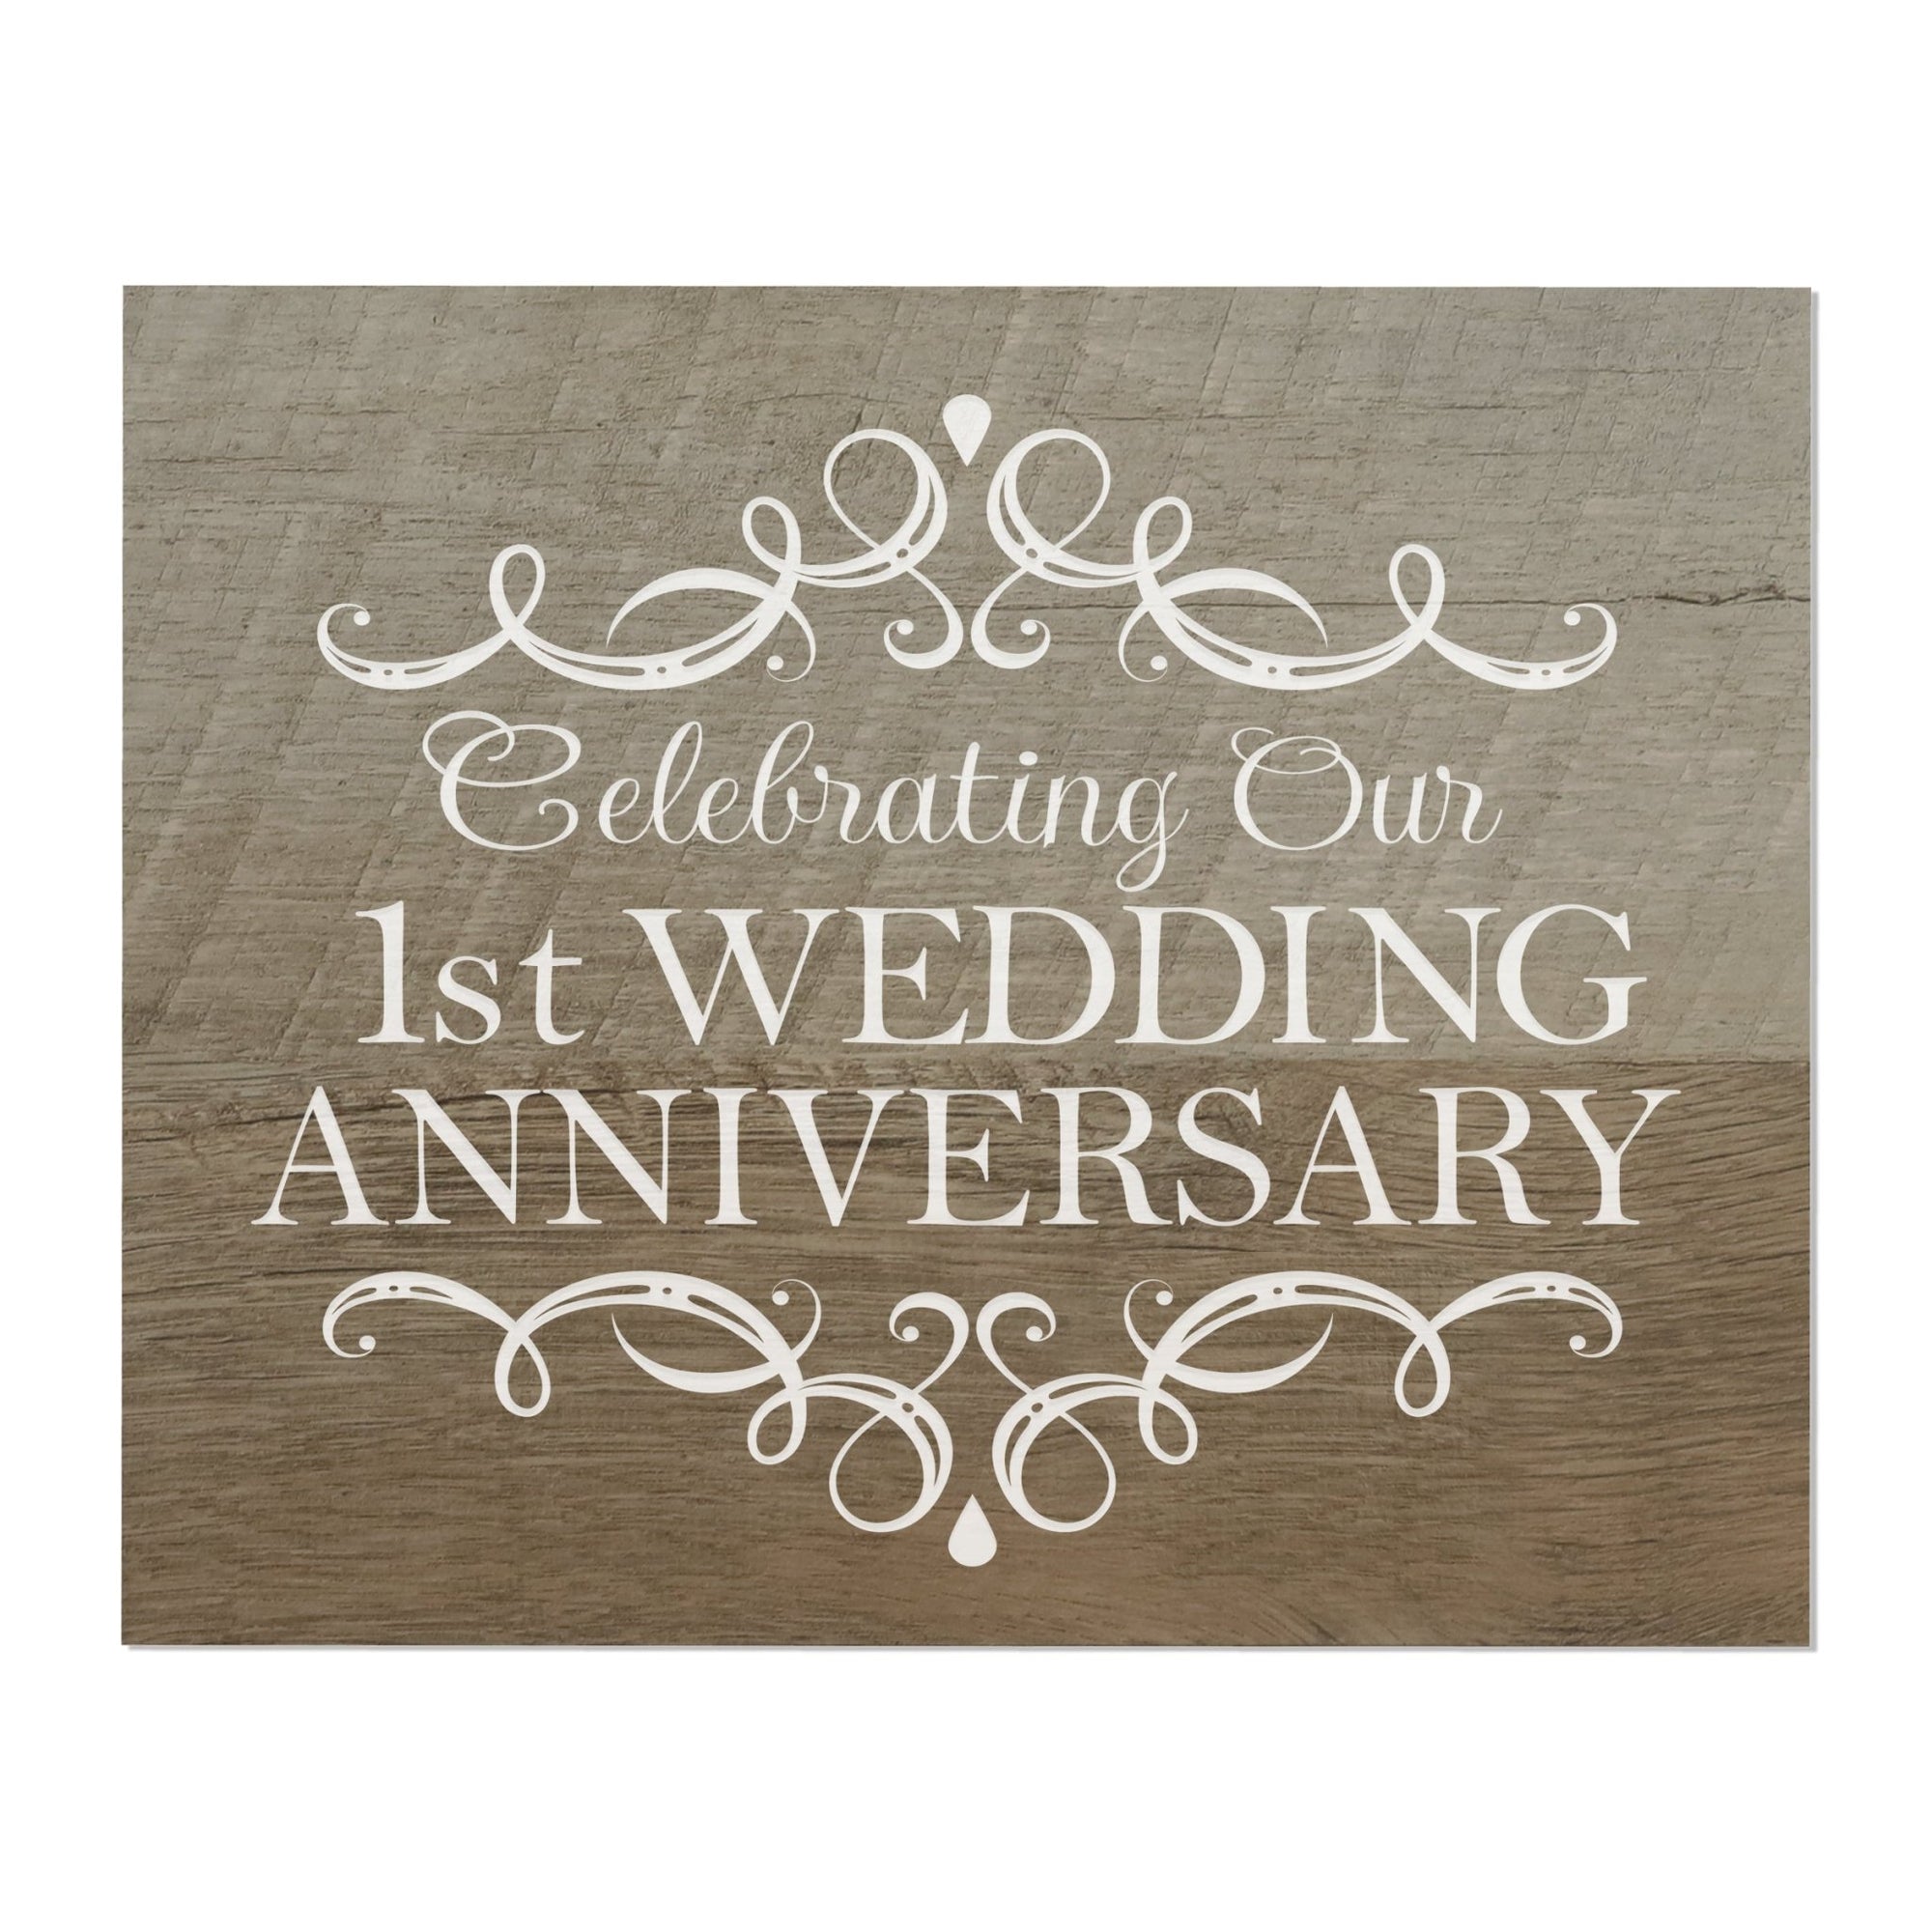 1st Wedding Anniversary Wall Plaque - Celebrating - LifeSong Milestones